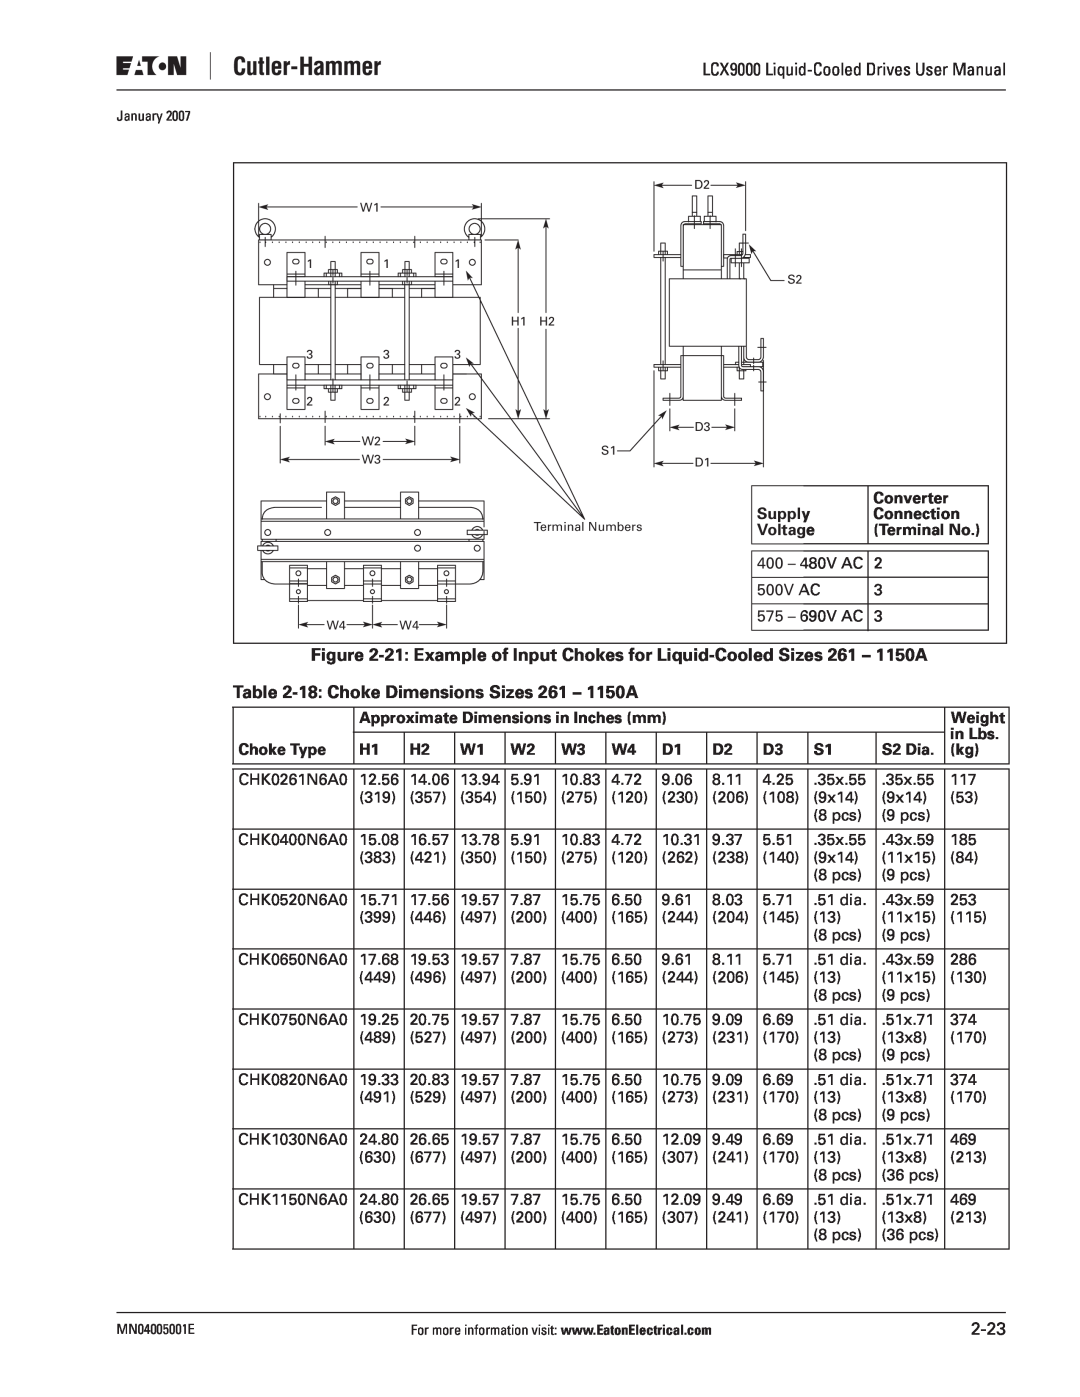 J. T. Eaton user manual 18 Choke Dimensions Sizes 261 - 1150A, LCX9000 Liquid-Cooled Drives User Manual, 2-23 